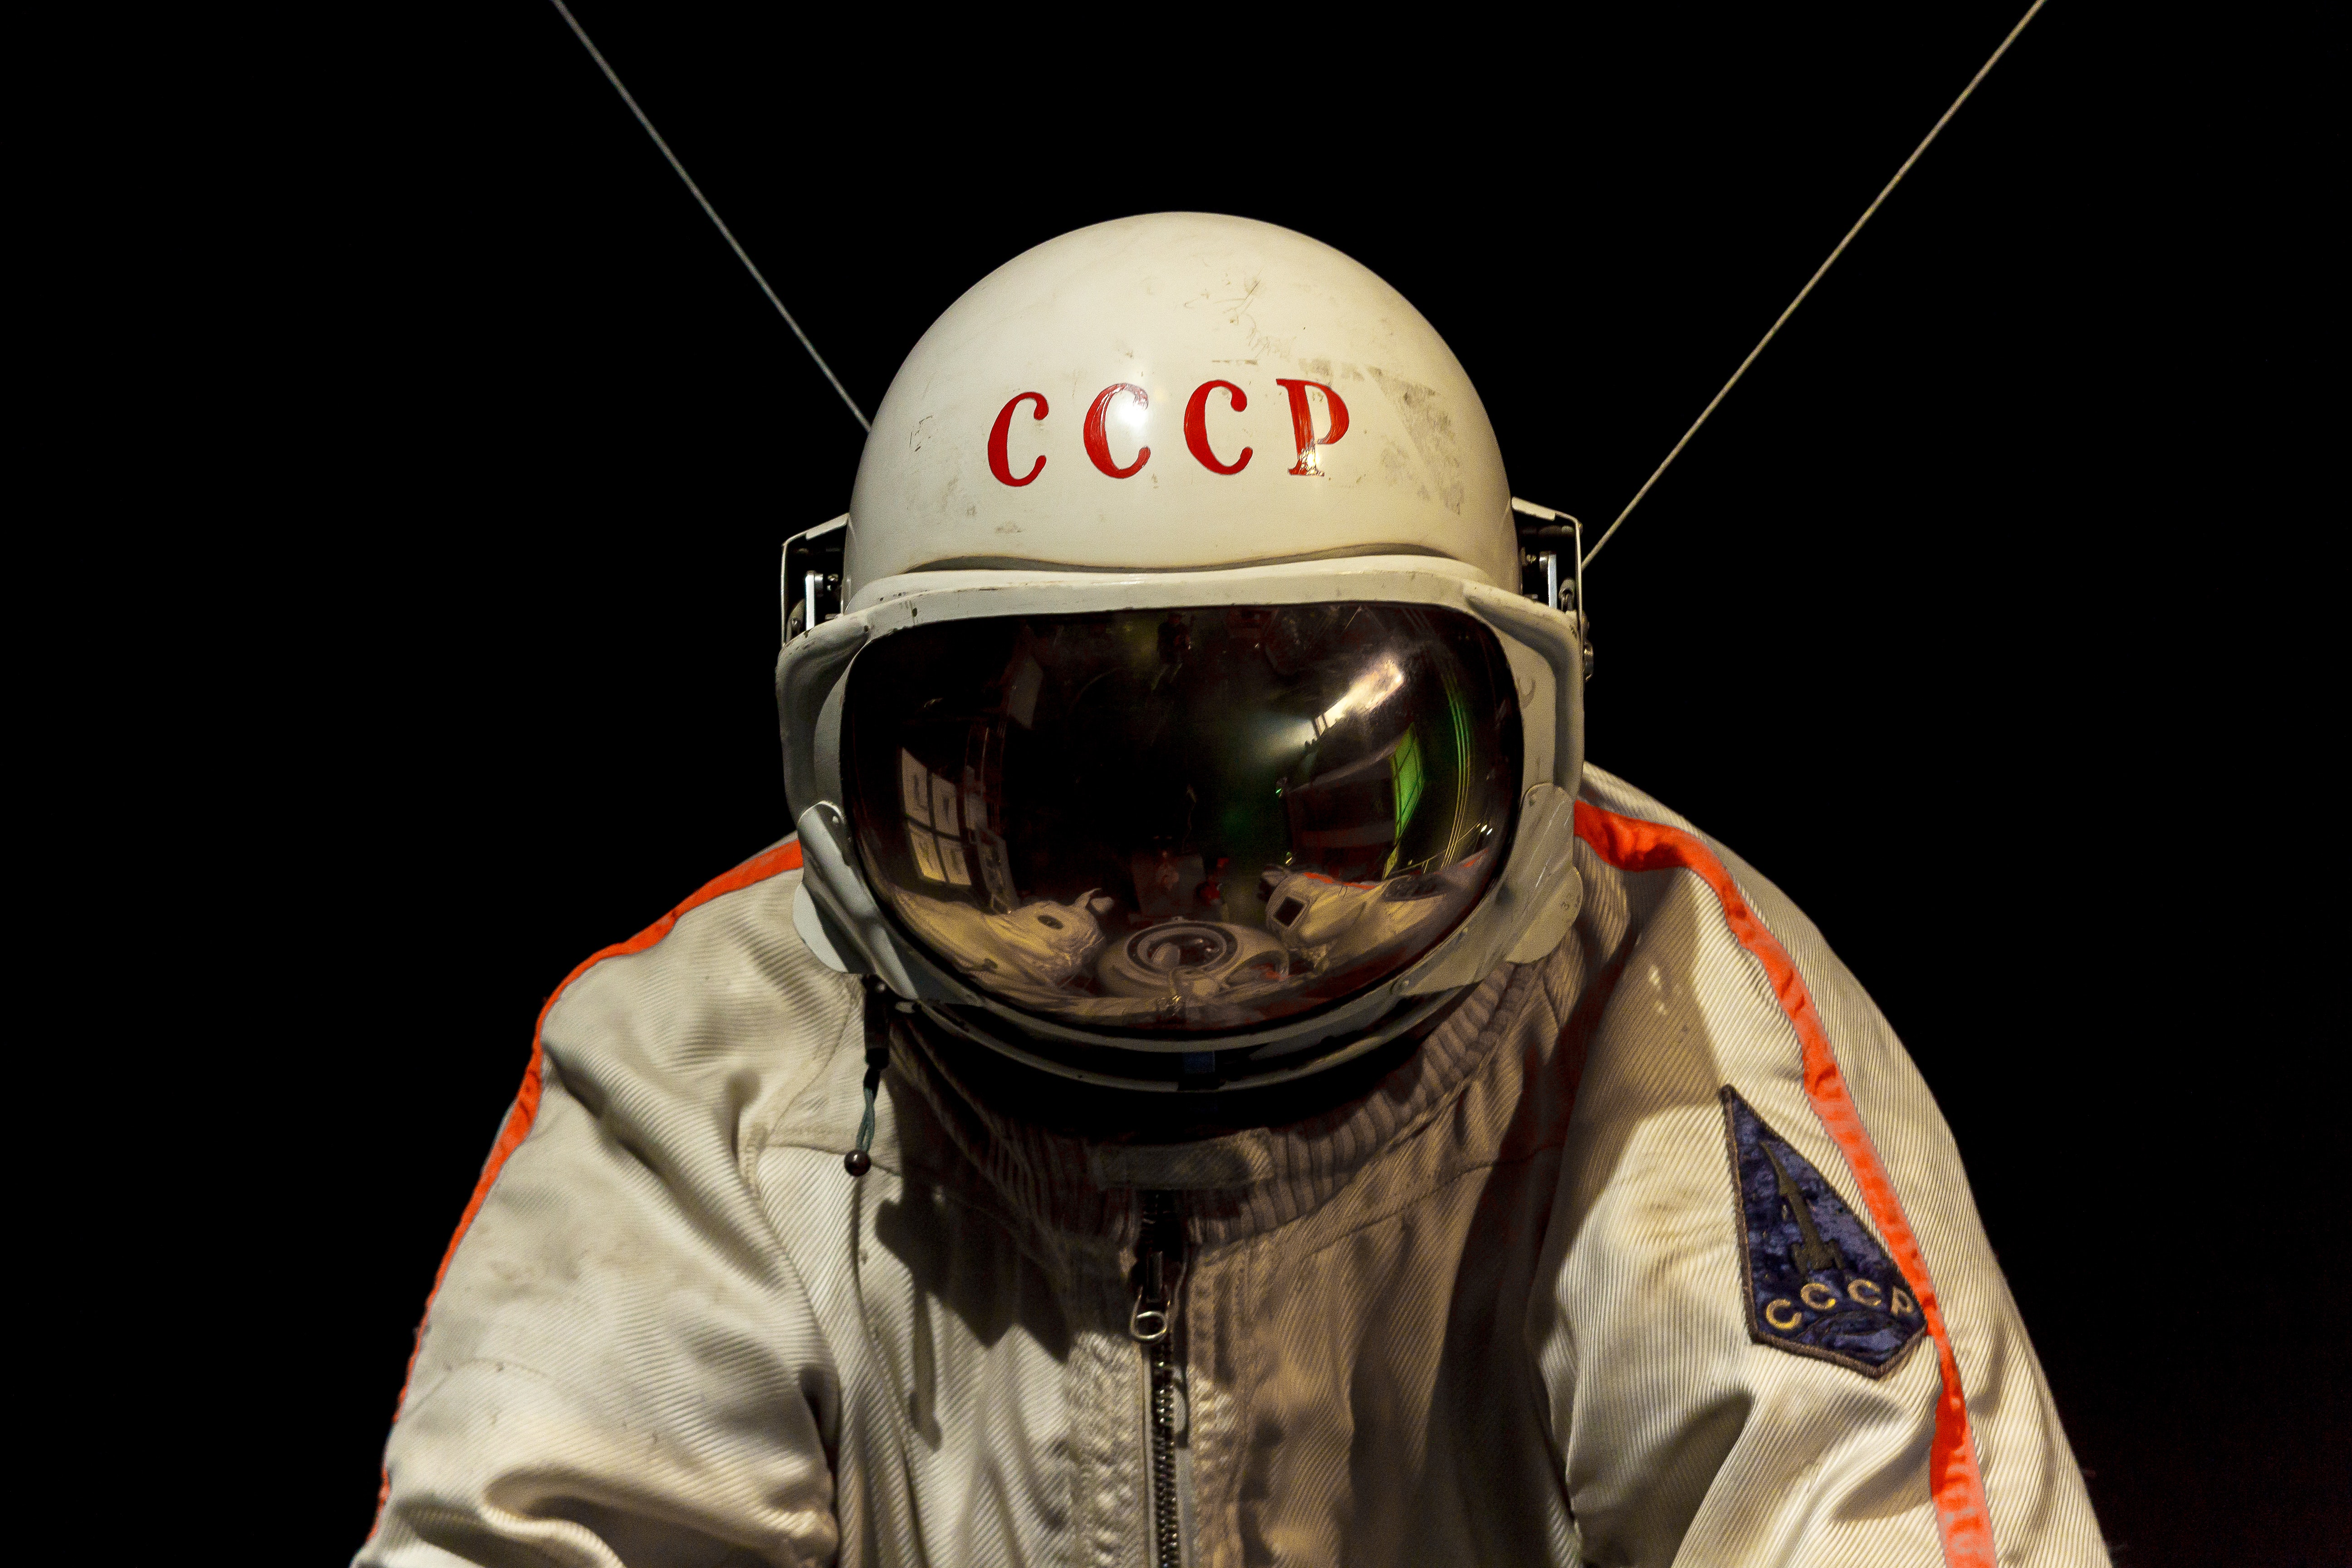 General 5184x3456 astronaut USSR spacesuit black background simple background helmet reflection